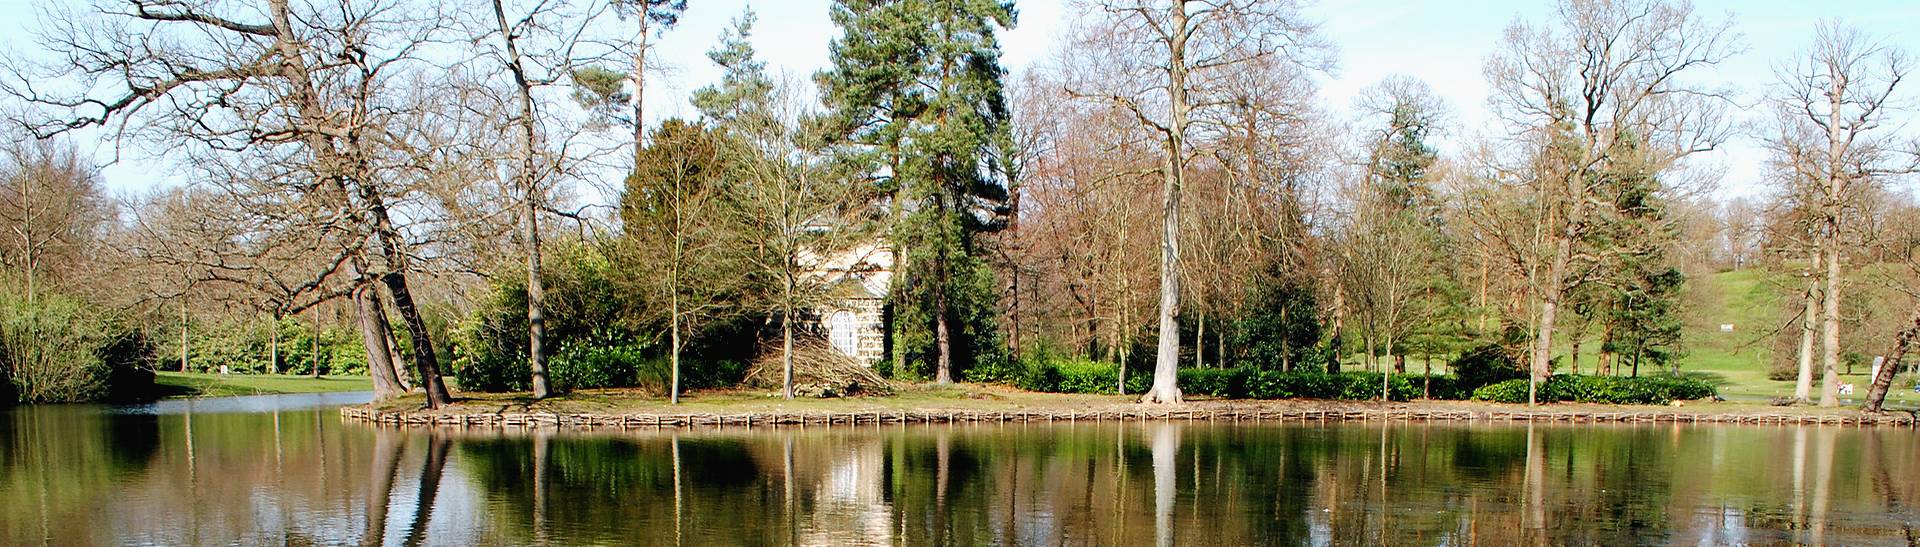 Lake in Surrey park